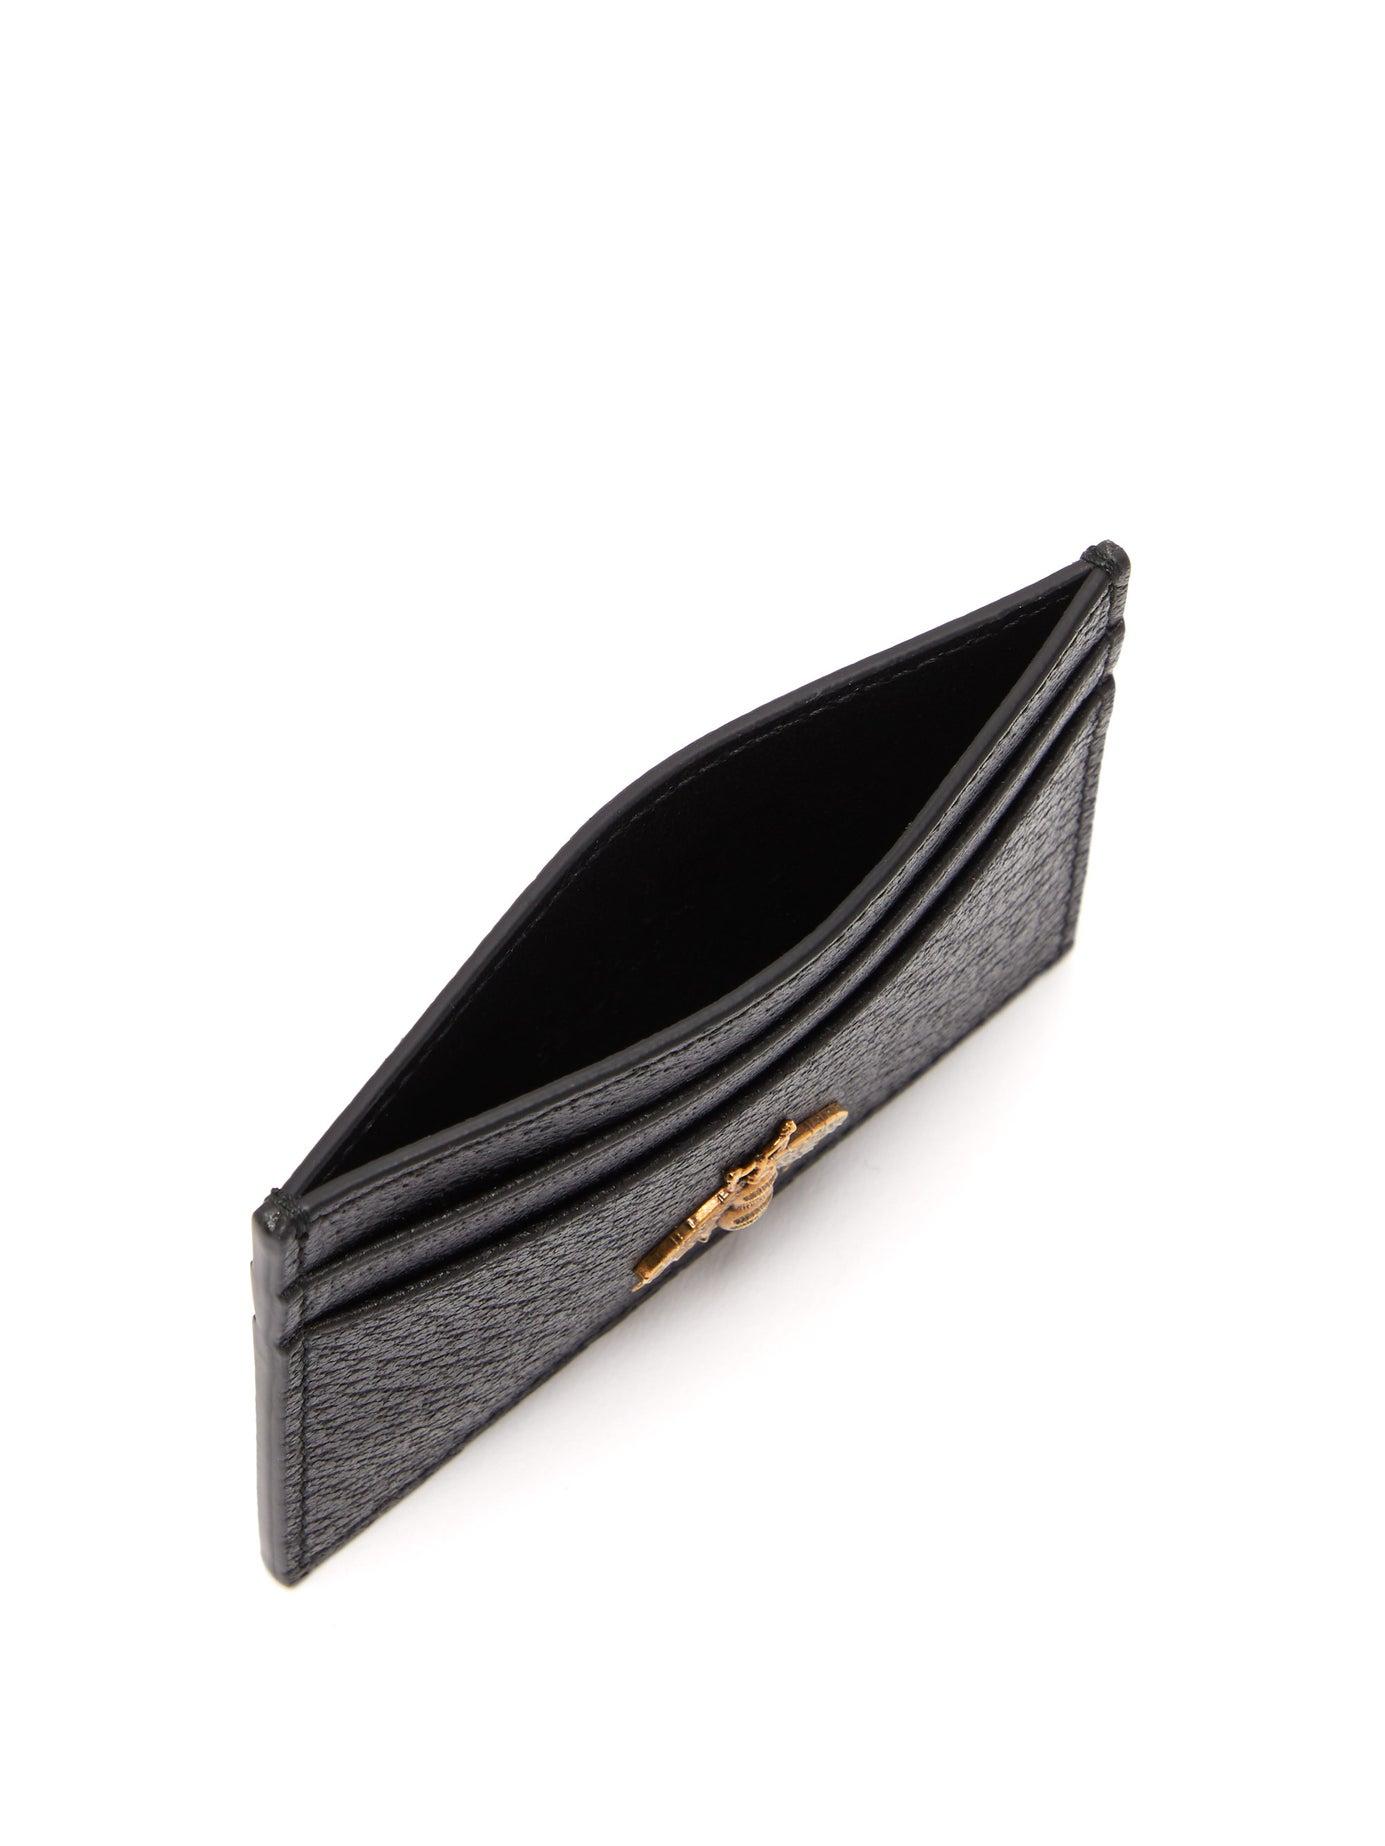 Gucci Bee-embellished Leather Cardholder in Black for Men - Lyst